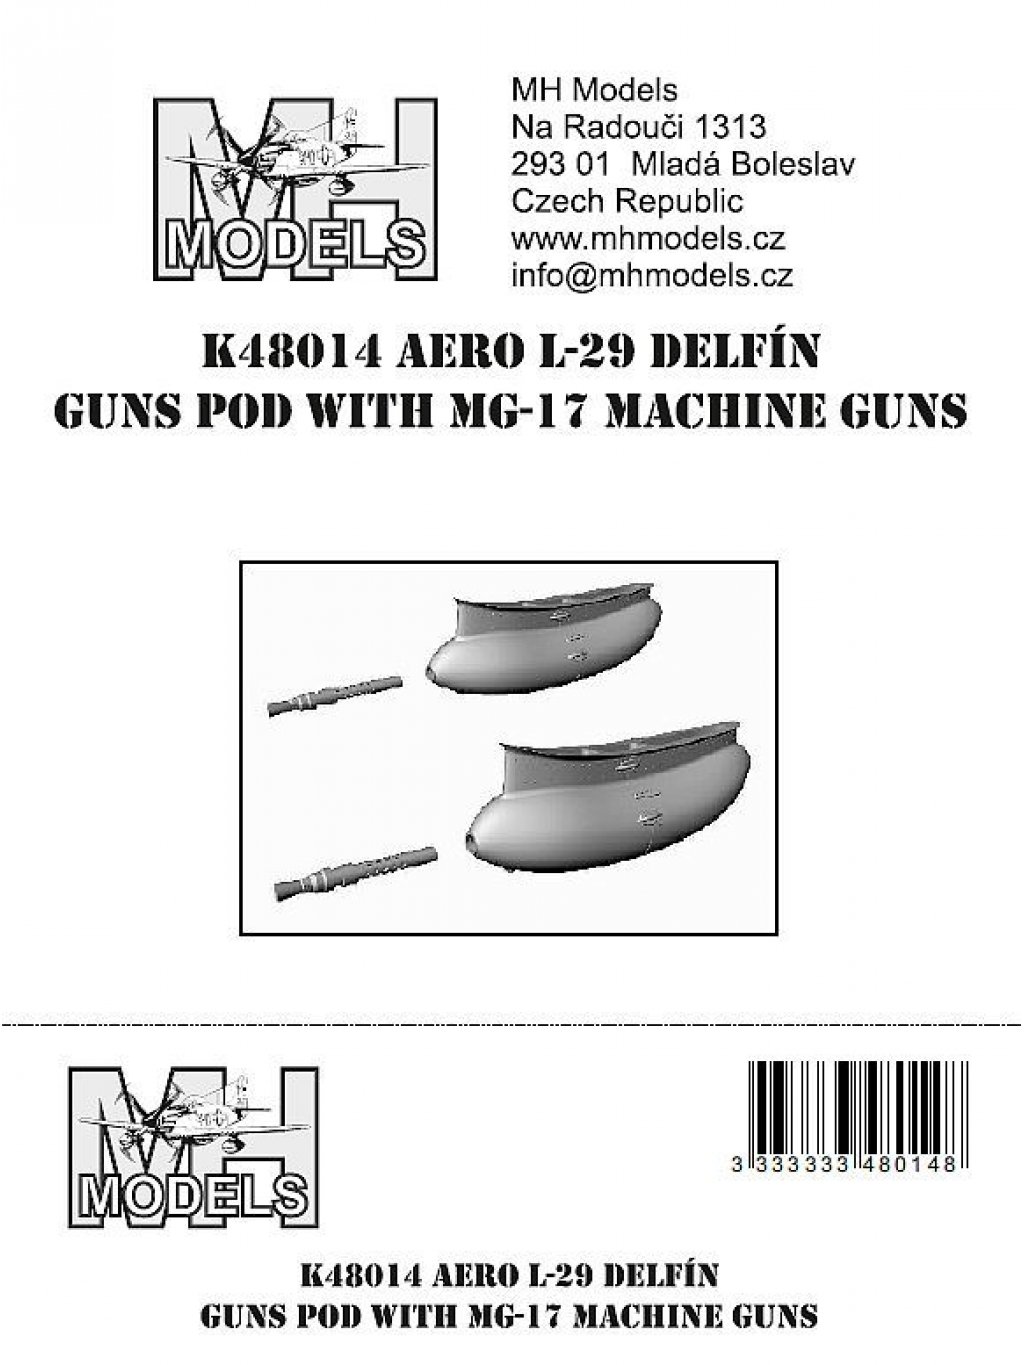 Aero L-29 Delfín guns pod with MG-17 machine guns.